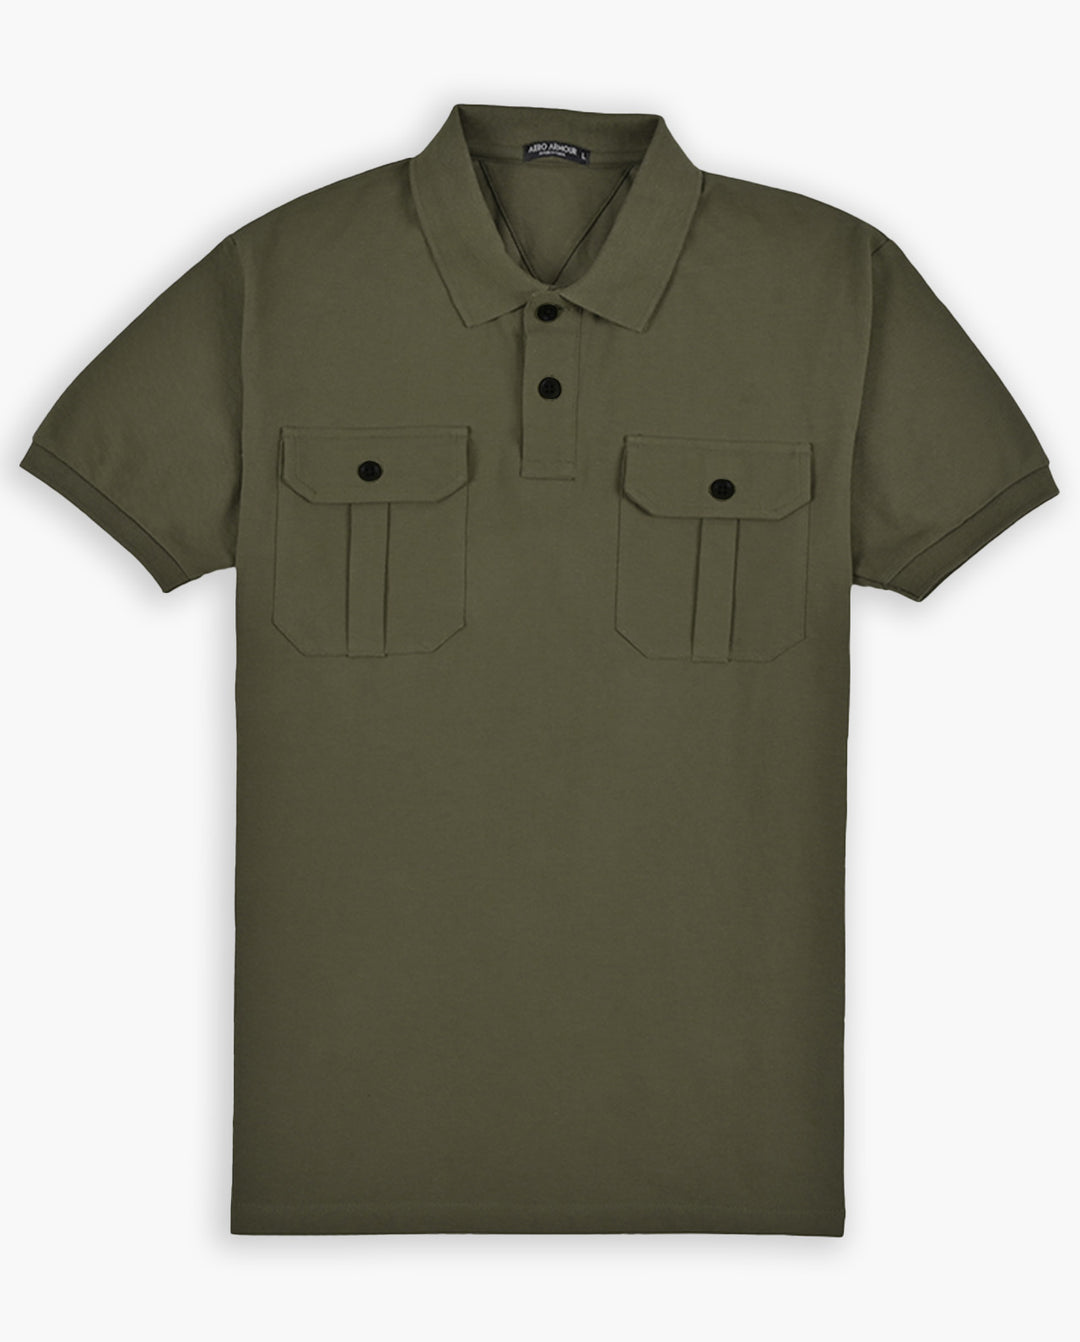 Aero Cargo Olive Green Polo T-Shirt - Aero Armour